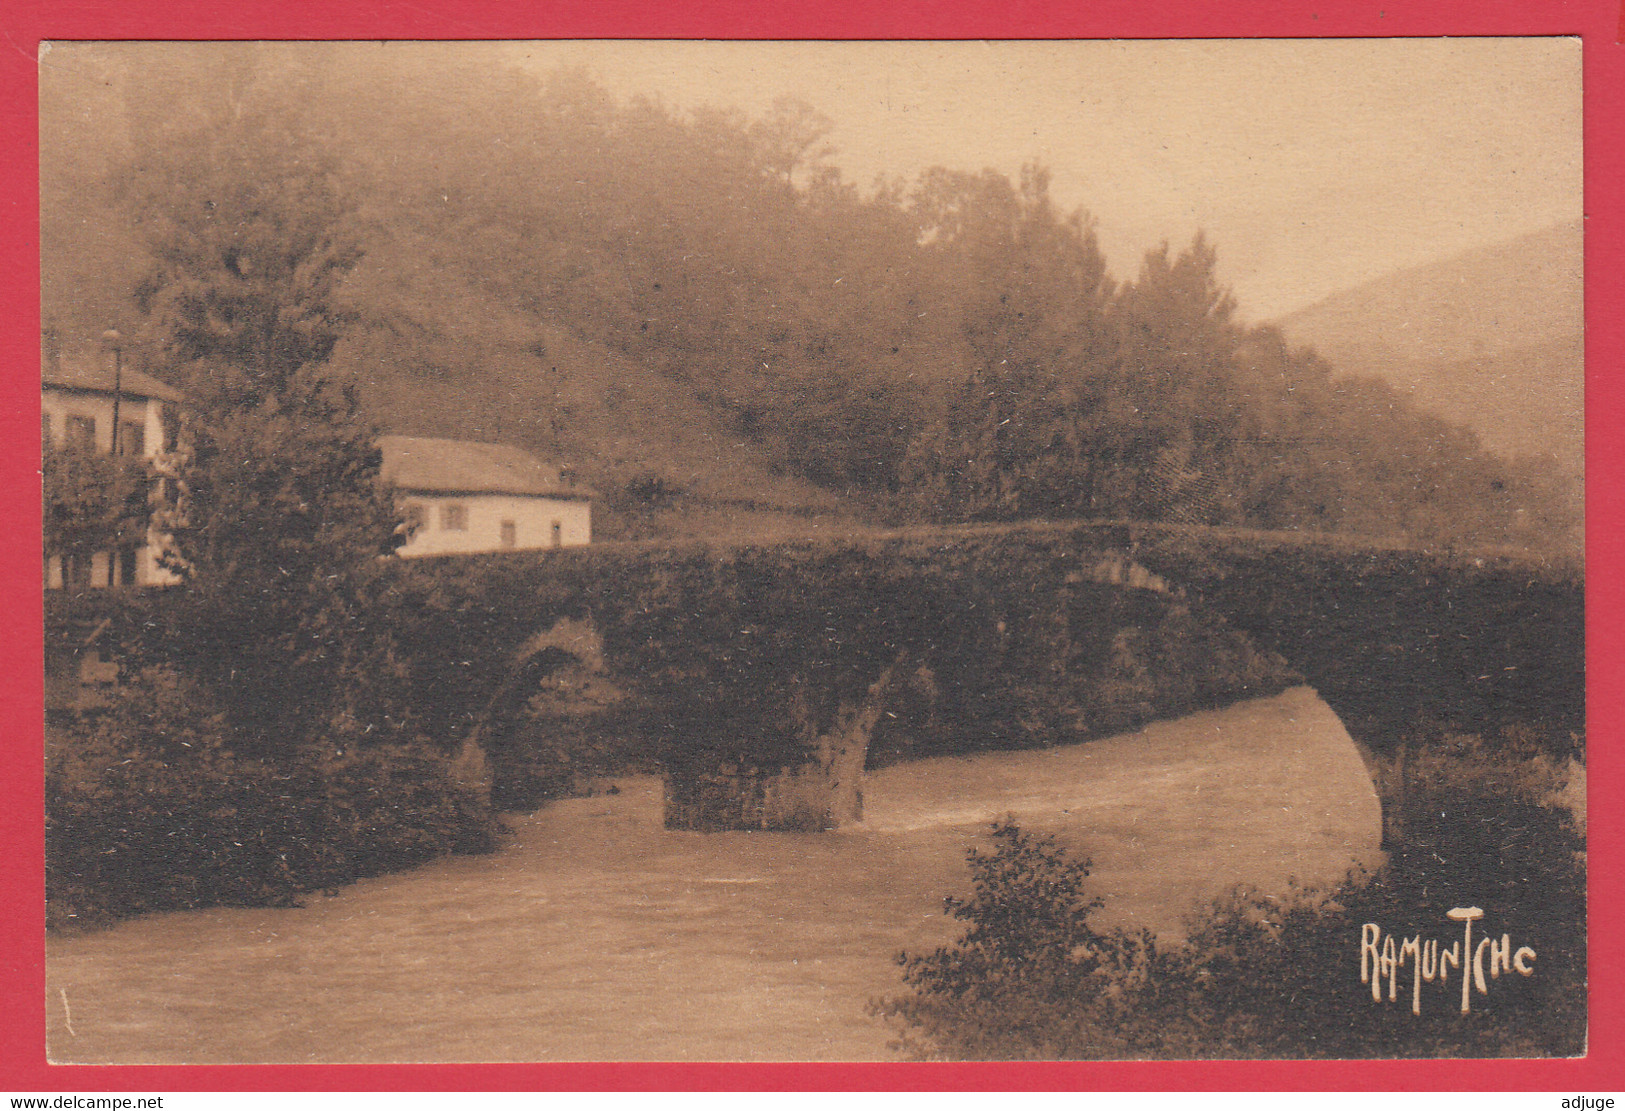 CPA-64- Pont Gothique De BIDARRAY- Rte De St-Etienne De Baïgorry- Ed. Bergevin 18040 * Vallée De La Nive * 2 Scans - Bidarray